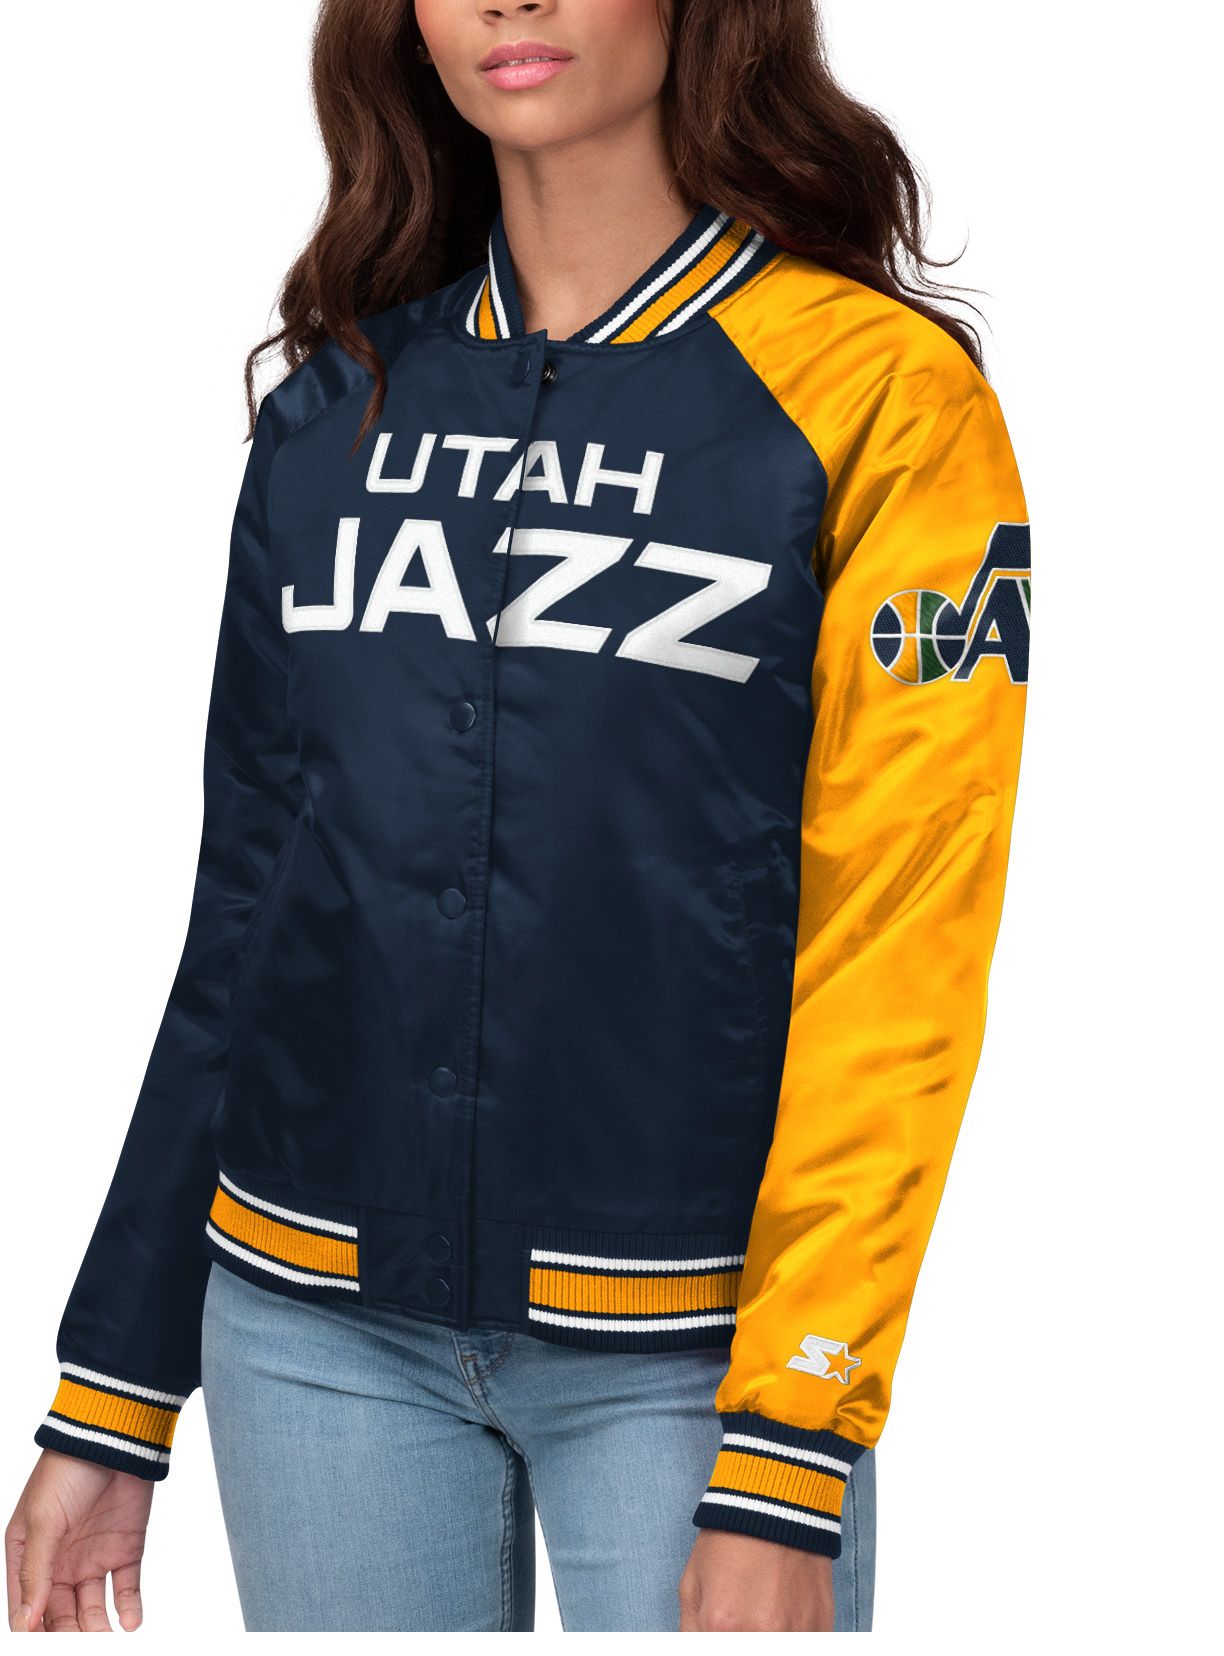 utah jazz women's apparel